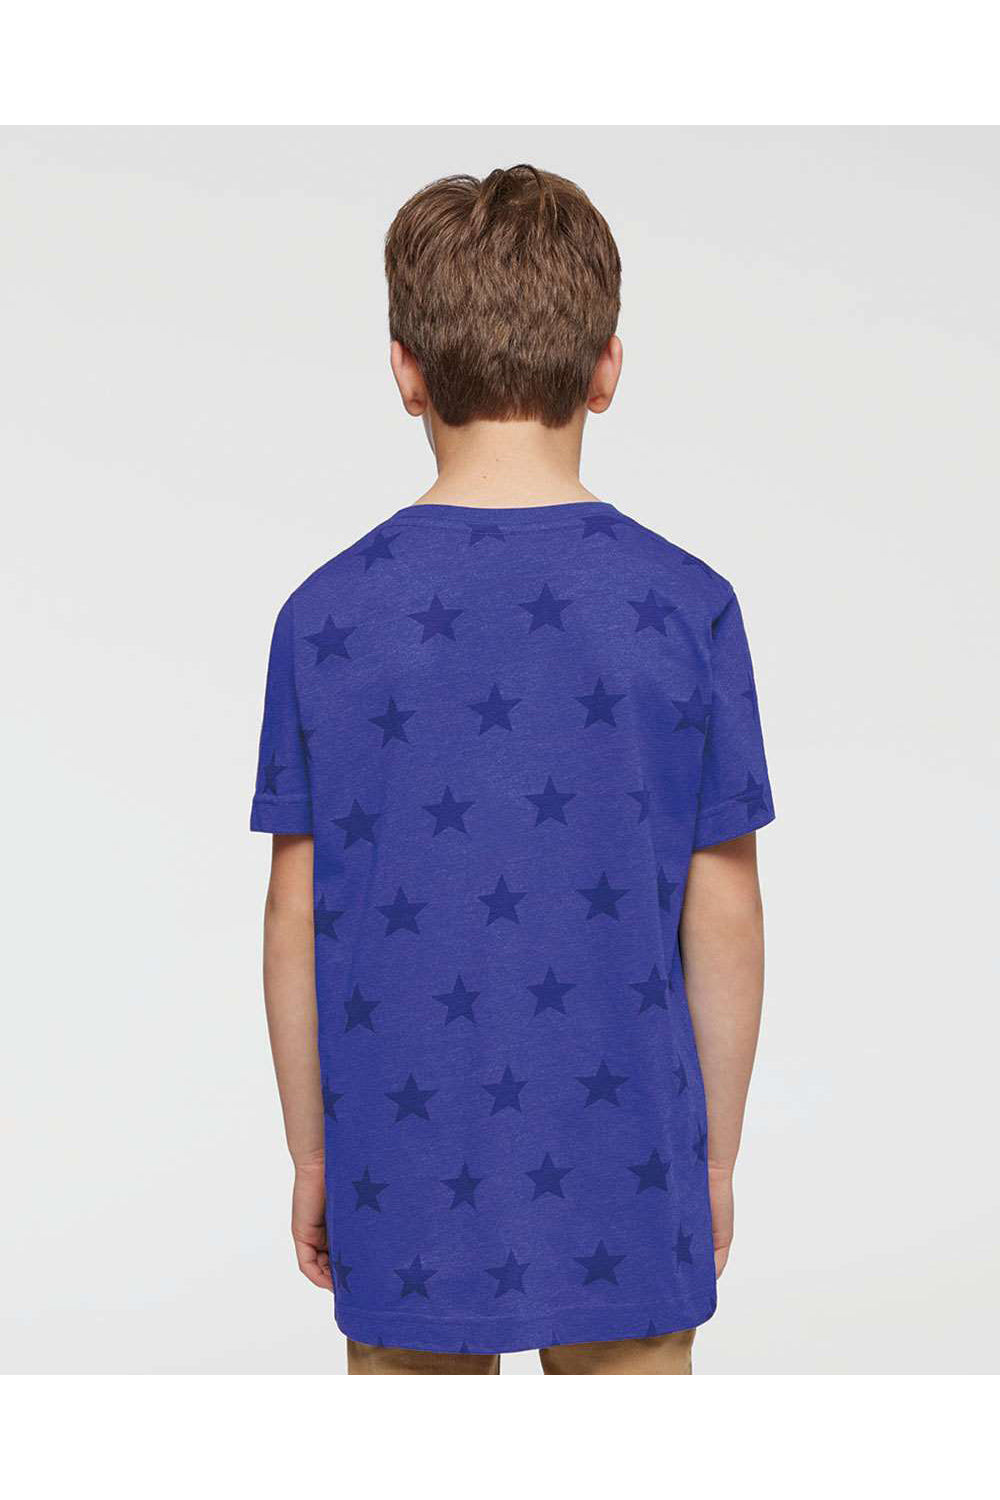 Code Five 2229 Youth Star Print Short Sleeve Crewneck T-Shirt Royal Blue Model Back